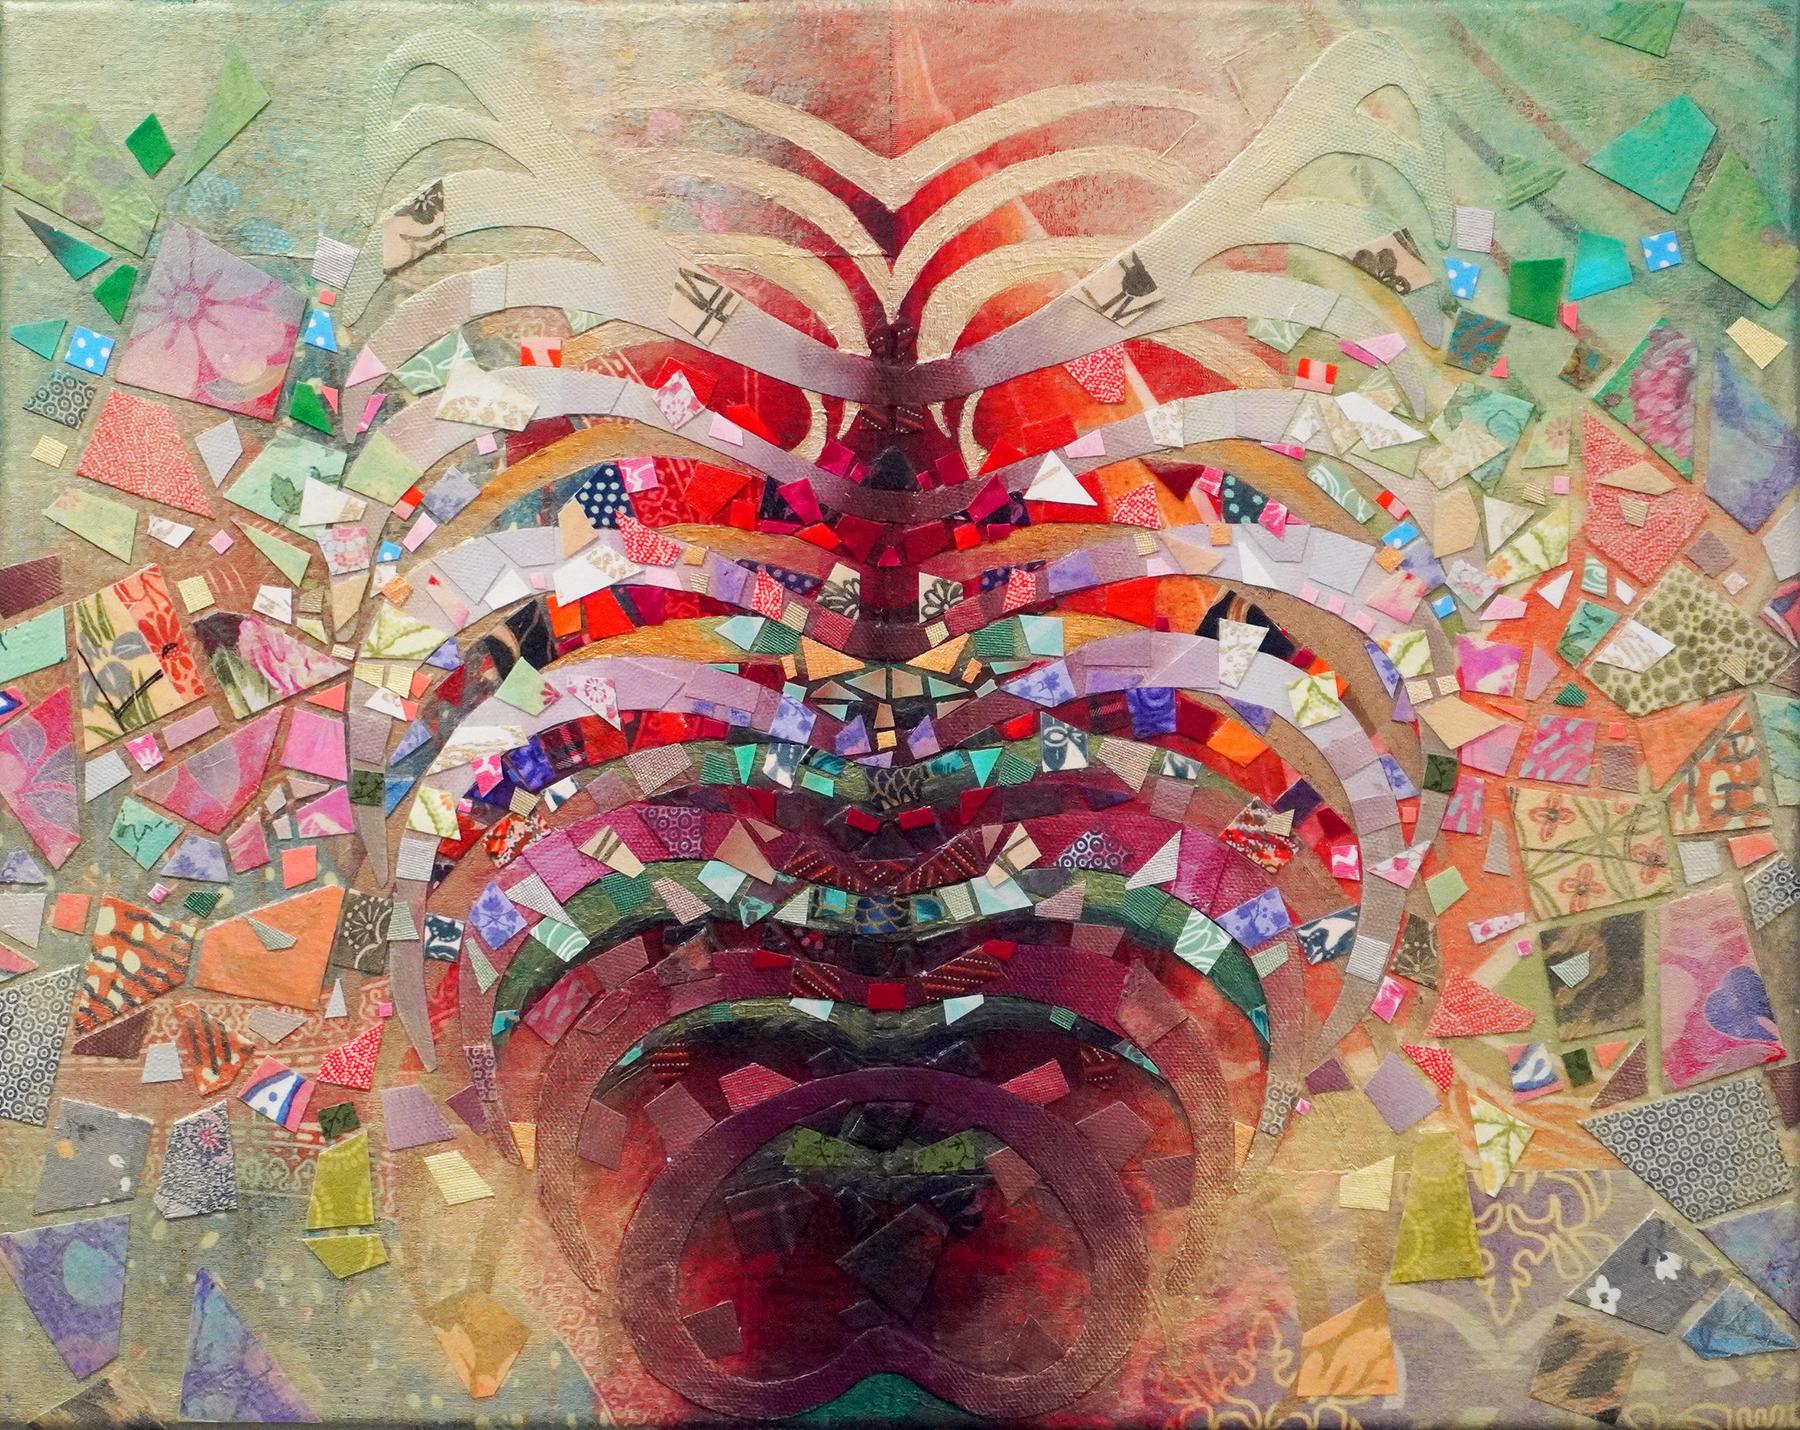 Soul Guardian : mixed media work of art - Mixed Media Art by Tomo Mori